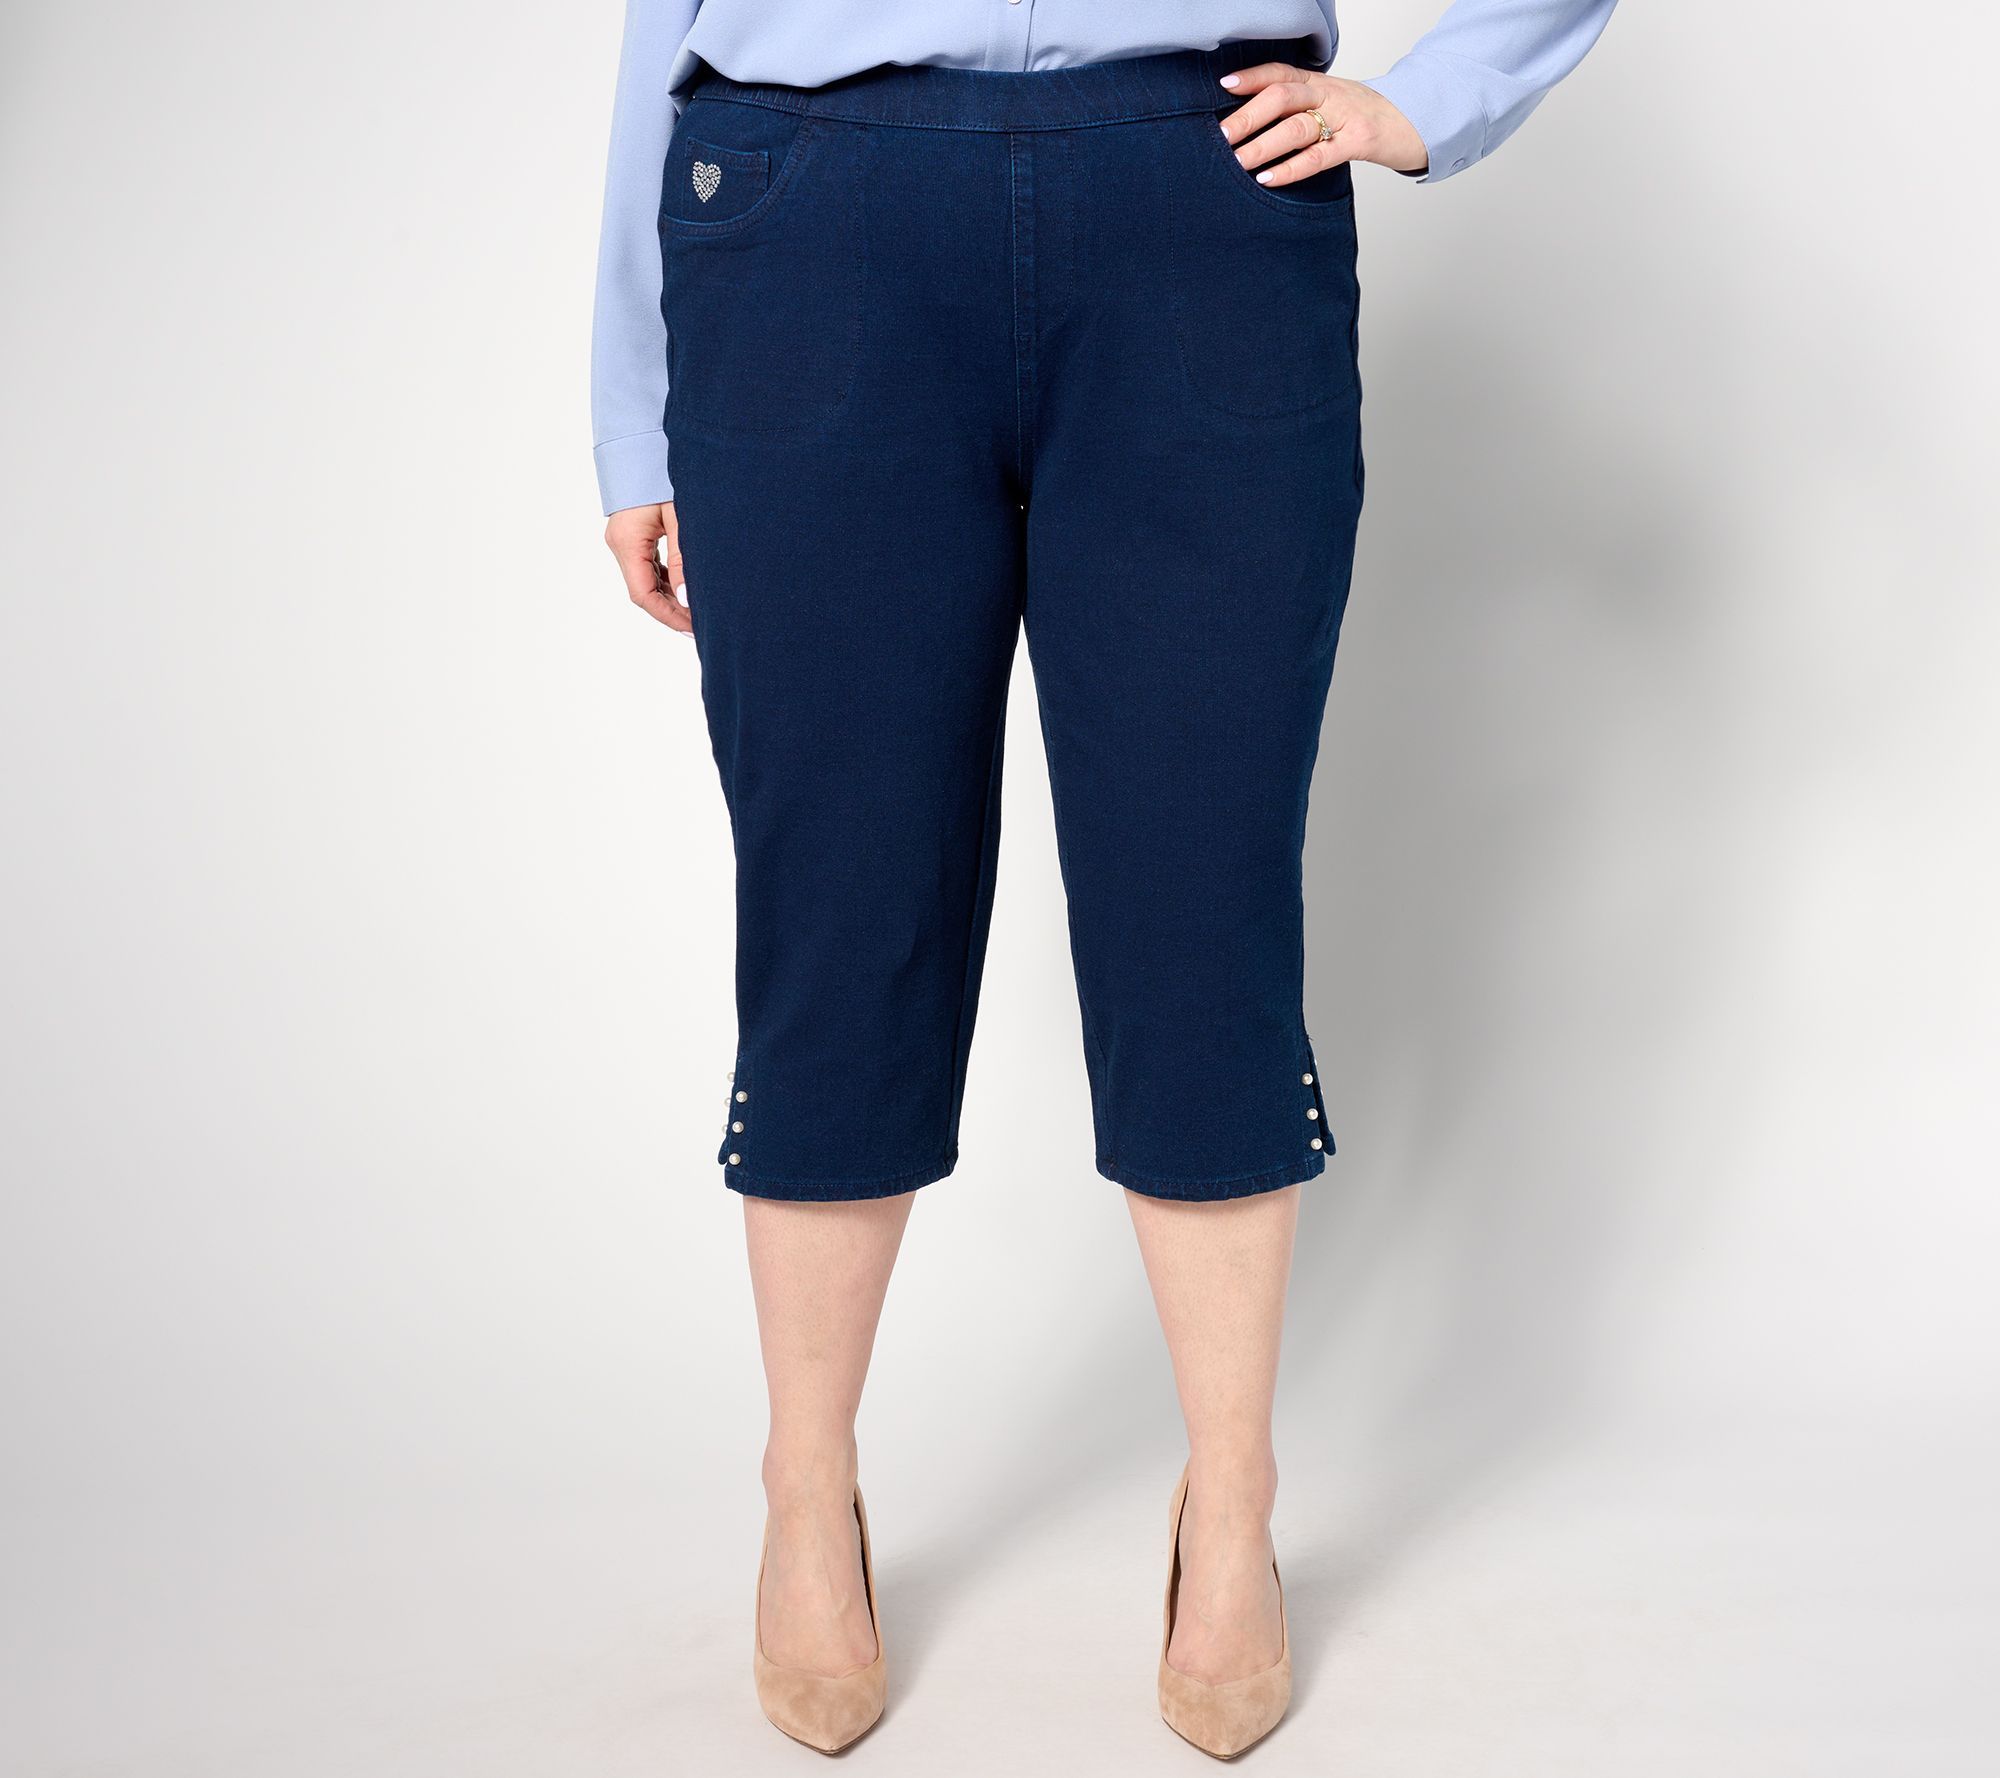 Quacker Factory Women's Petite Pants 1XP DreamJeannes Short Mini Blue A636664